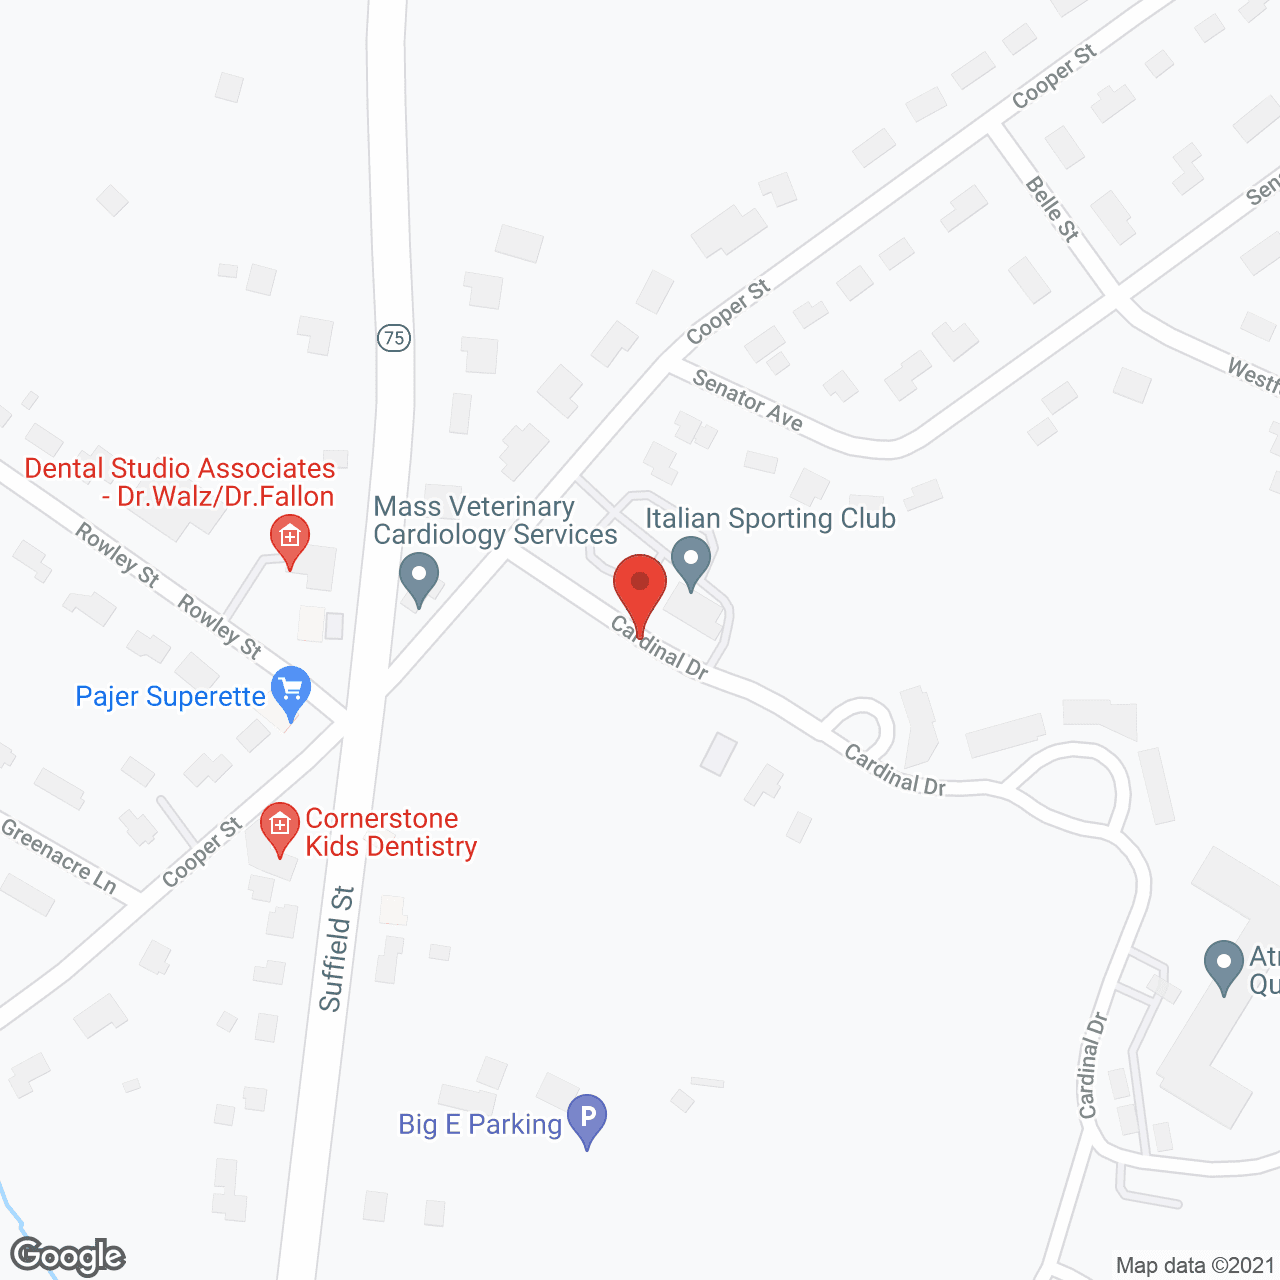 The Atrium at Cardinal Drive in google map